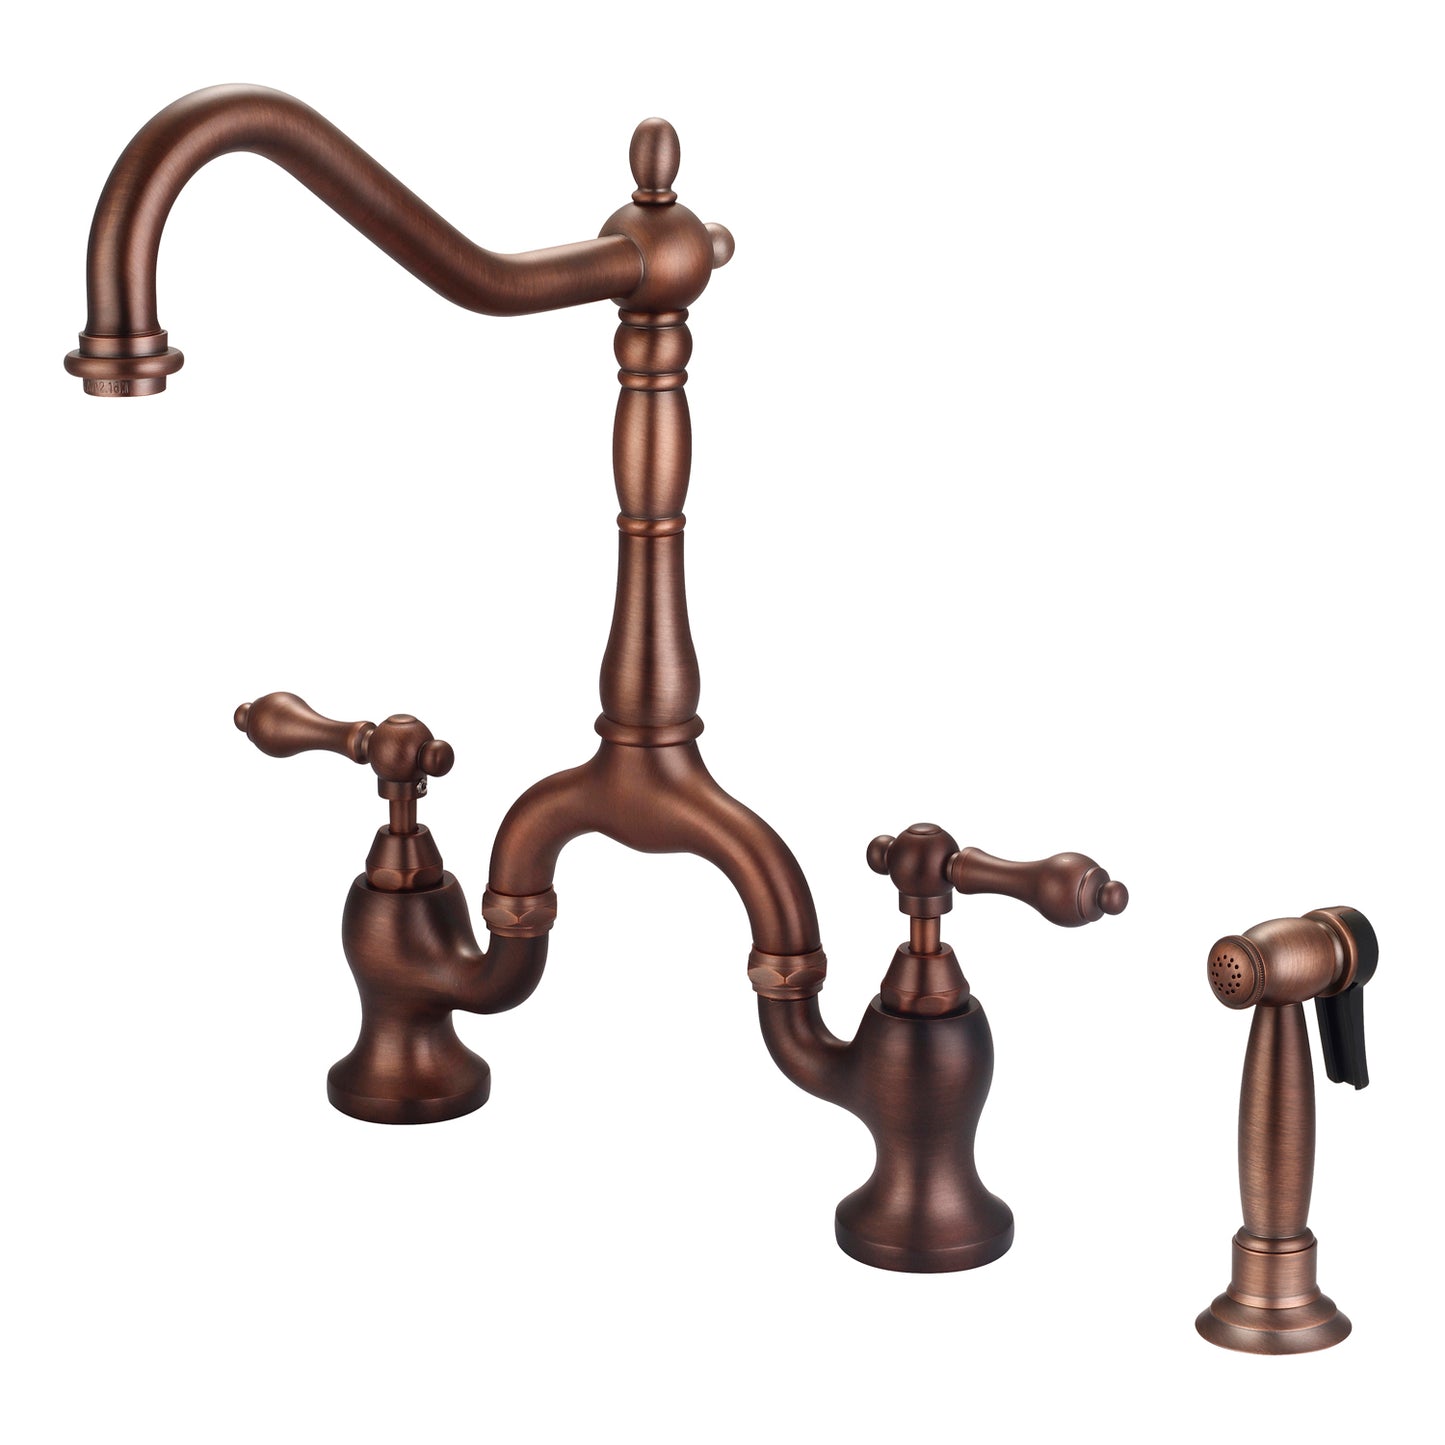 Carlton Kitchen Bridge Faucet, Sidesprayer & Metal Lever Handles, Oil Rubbed Bronze